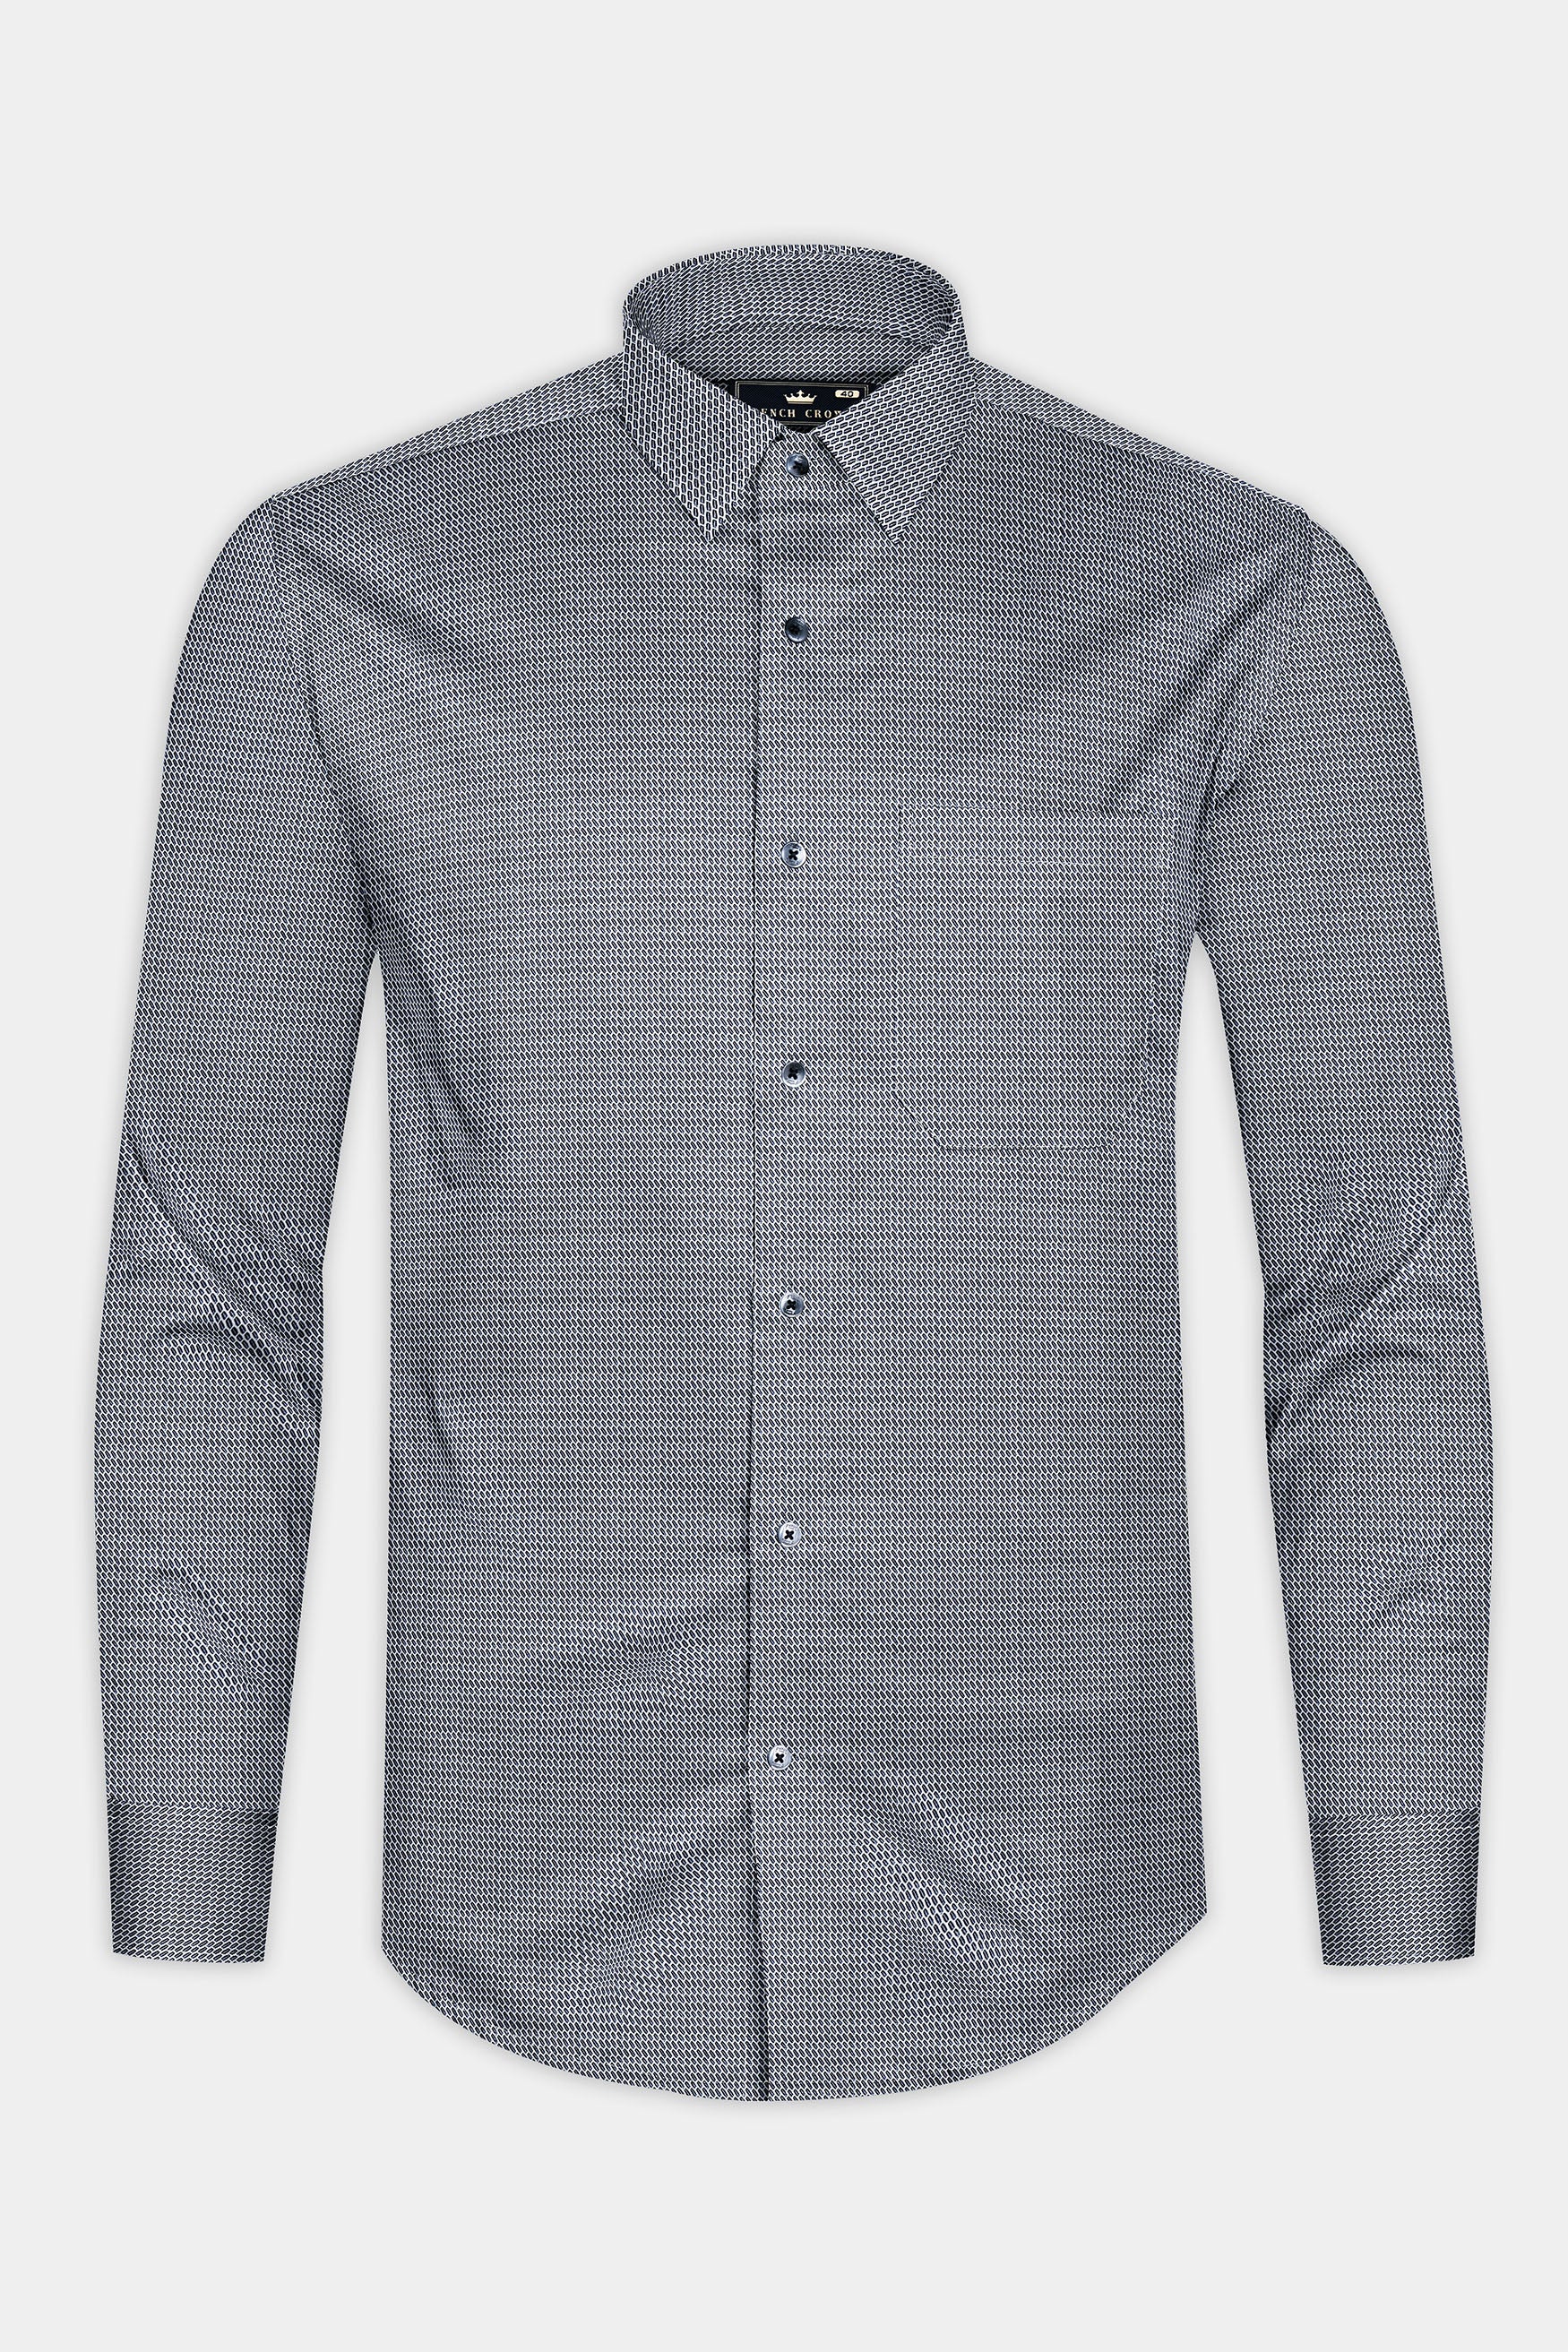 Gunsmoke Gray Dobby Textured Premium Giza Cotton Shirt